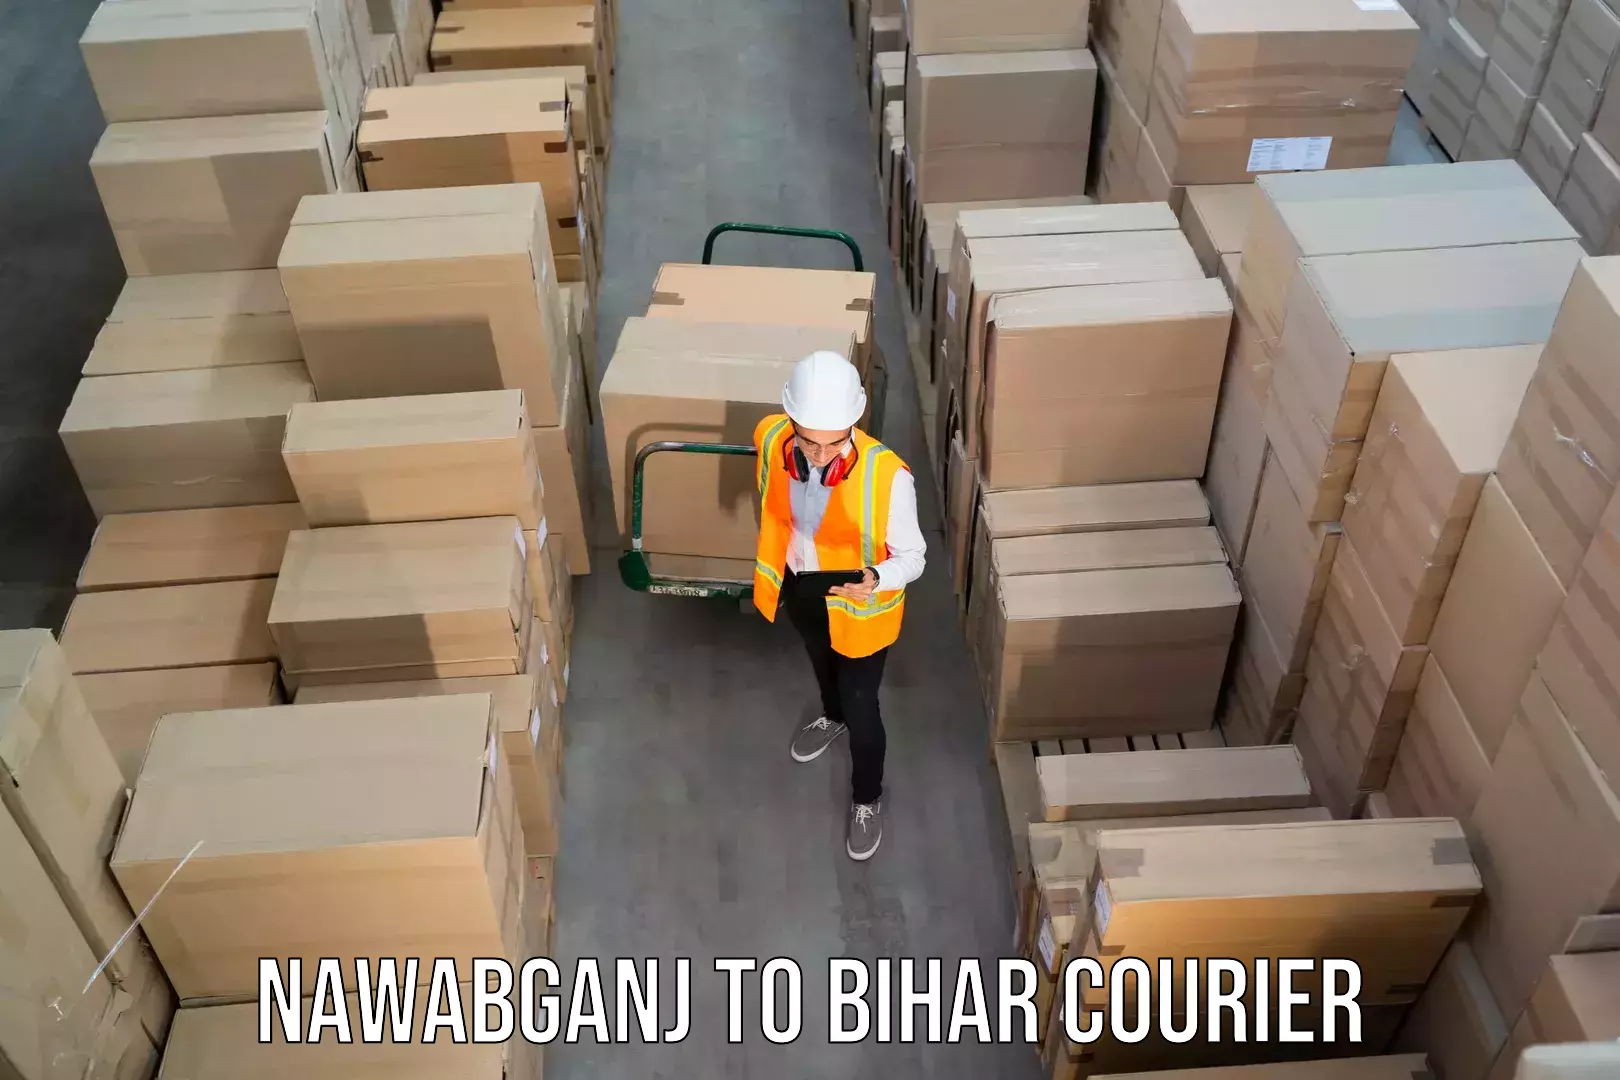 Courier service comparison Nawabganj to Bhawanipur Rajdham